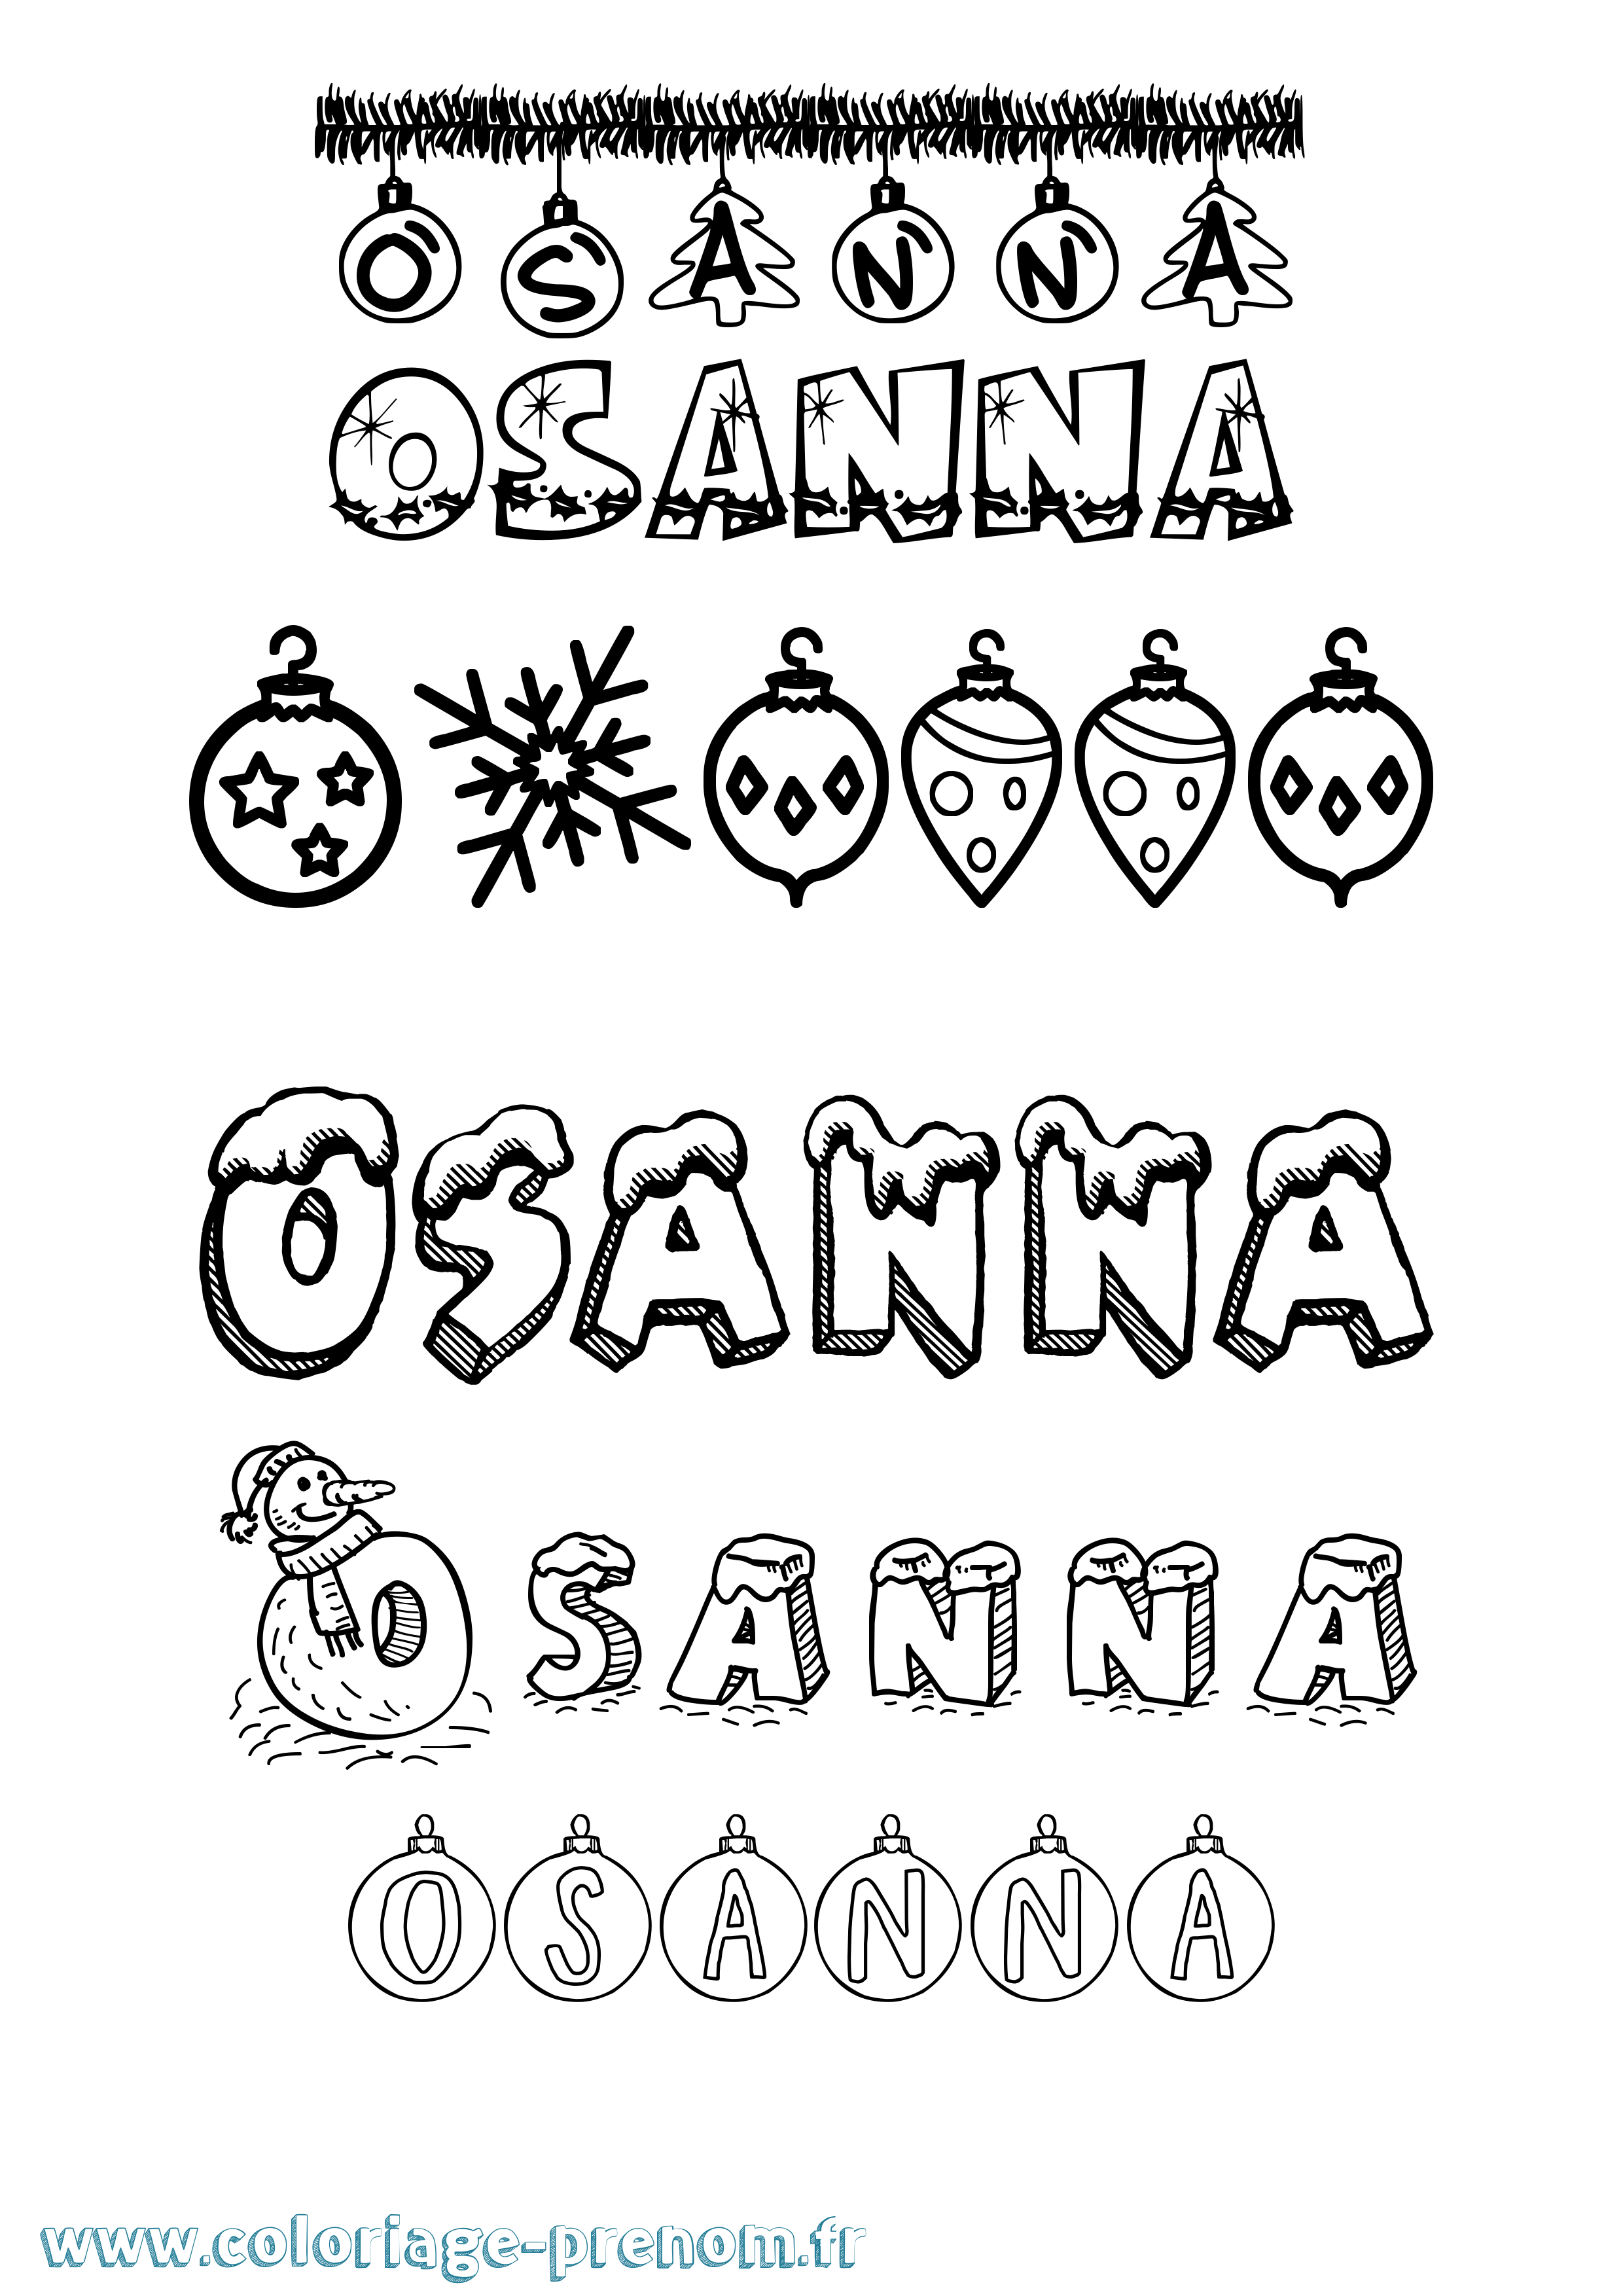 Coloriage prénom Osanna Noël